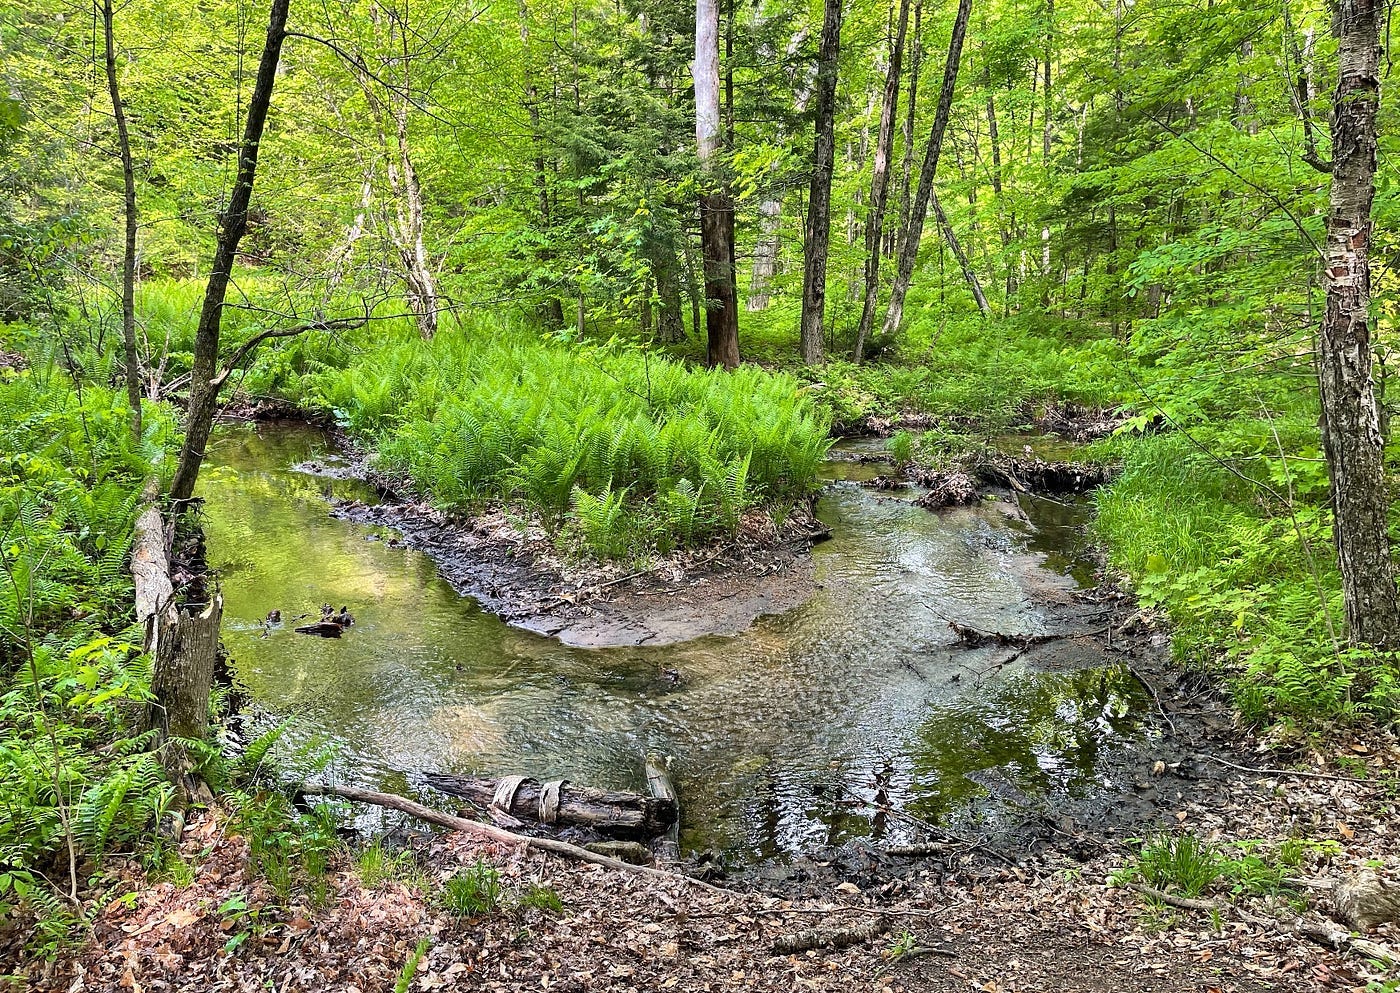 A pleasant stream, curving through green forest